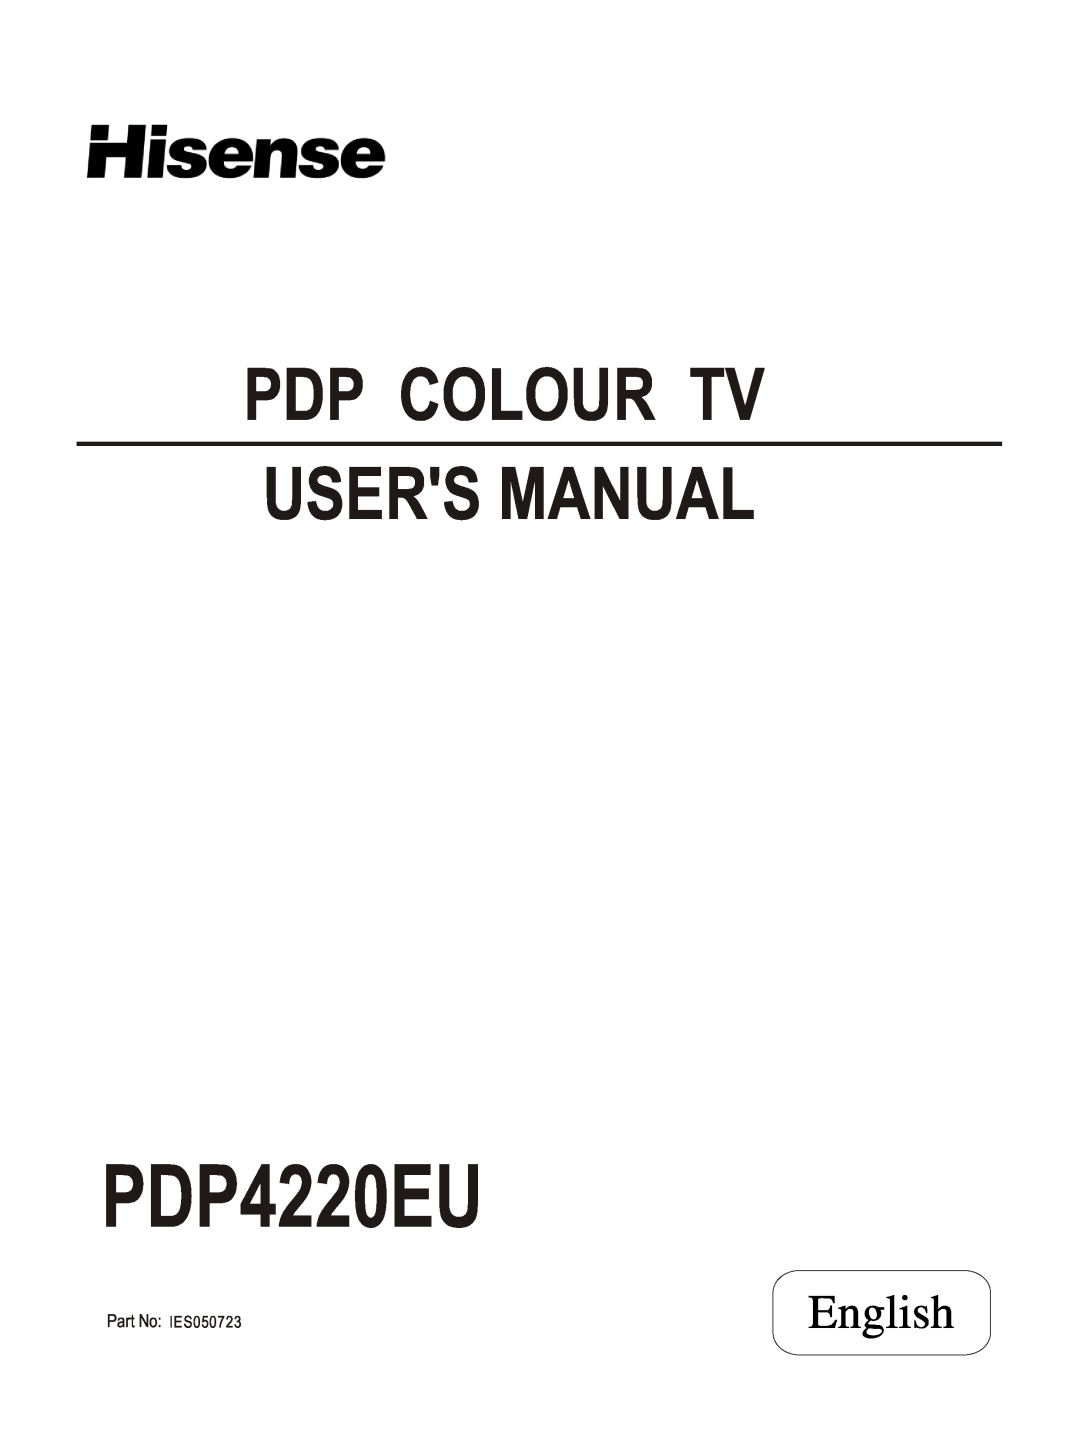 Hisense Group PDP4220EU user manual Pdp Colour Tv Users Manual, Part No IES050723 